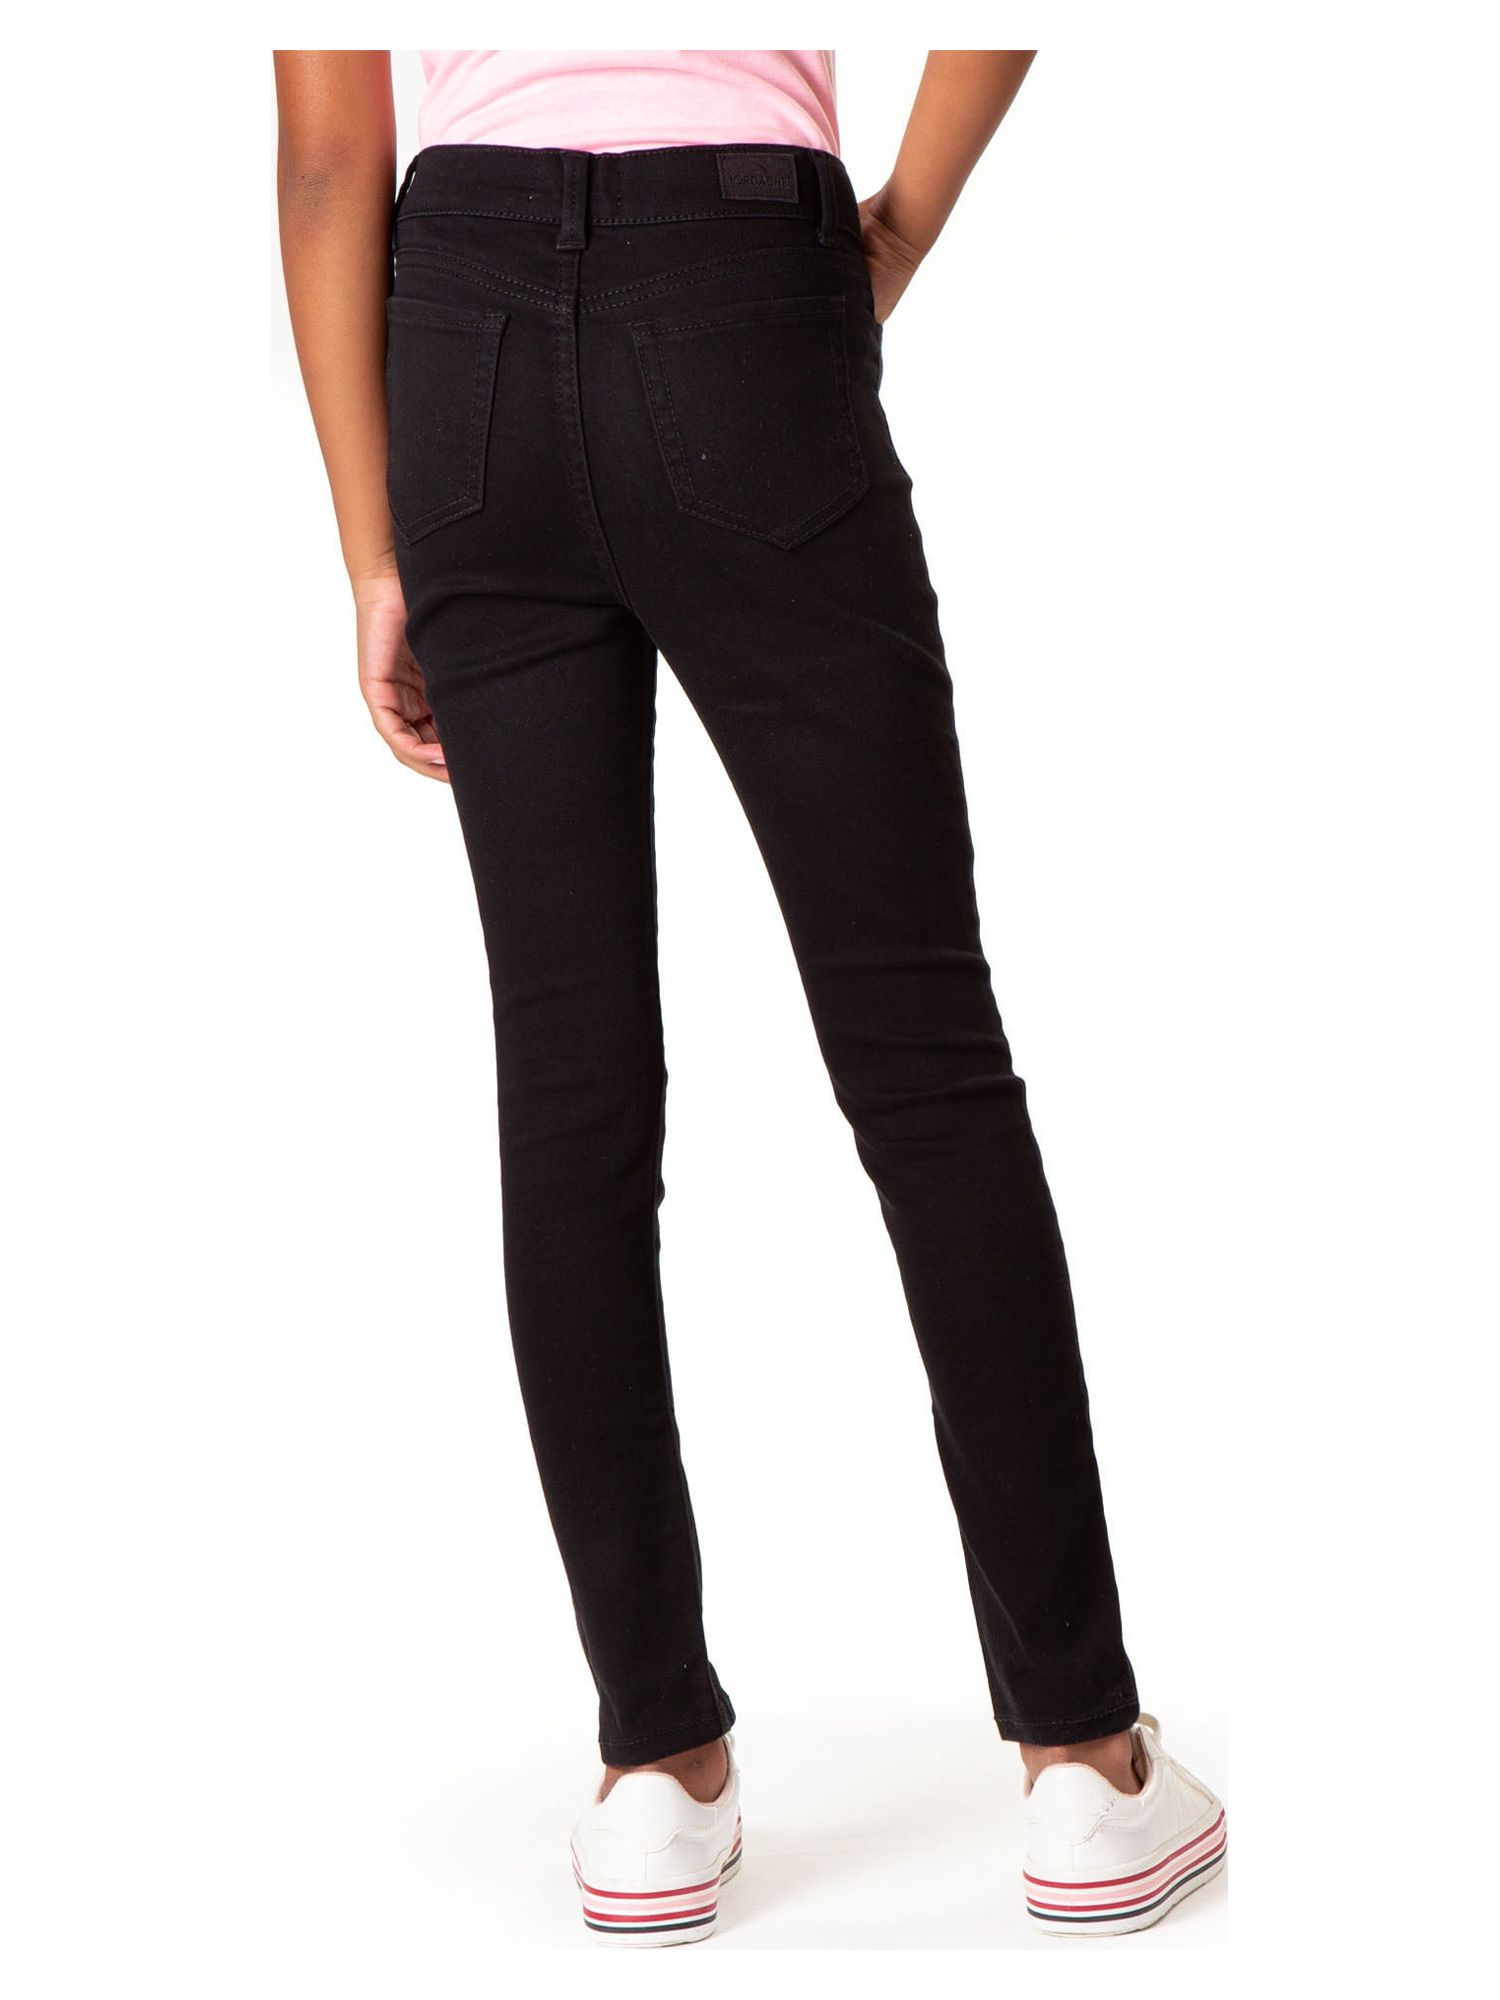 Jordache Girls Super Skinny High Rise Jeans, Sizes 5-18 & Slim - image 3 of 5